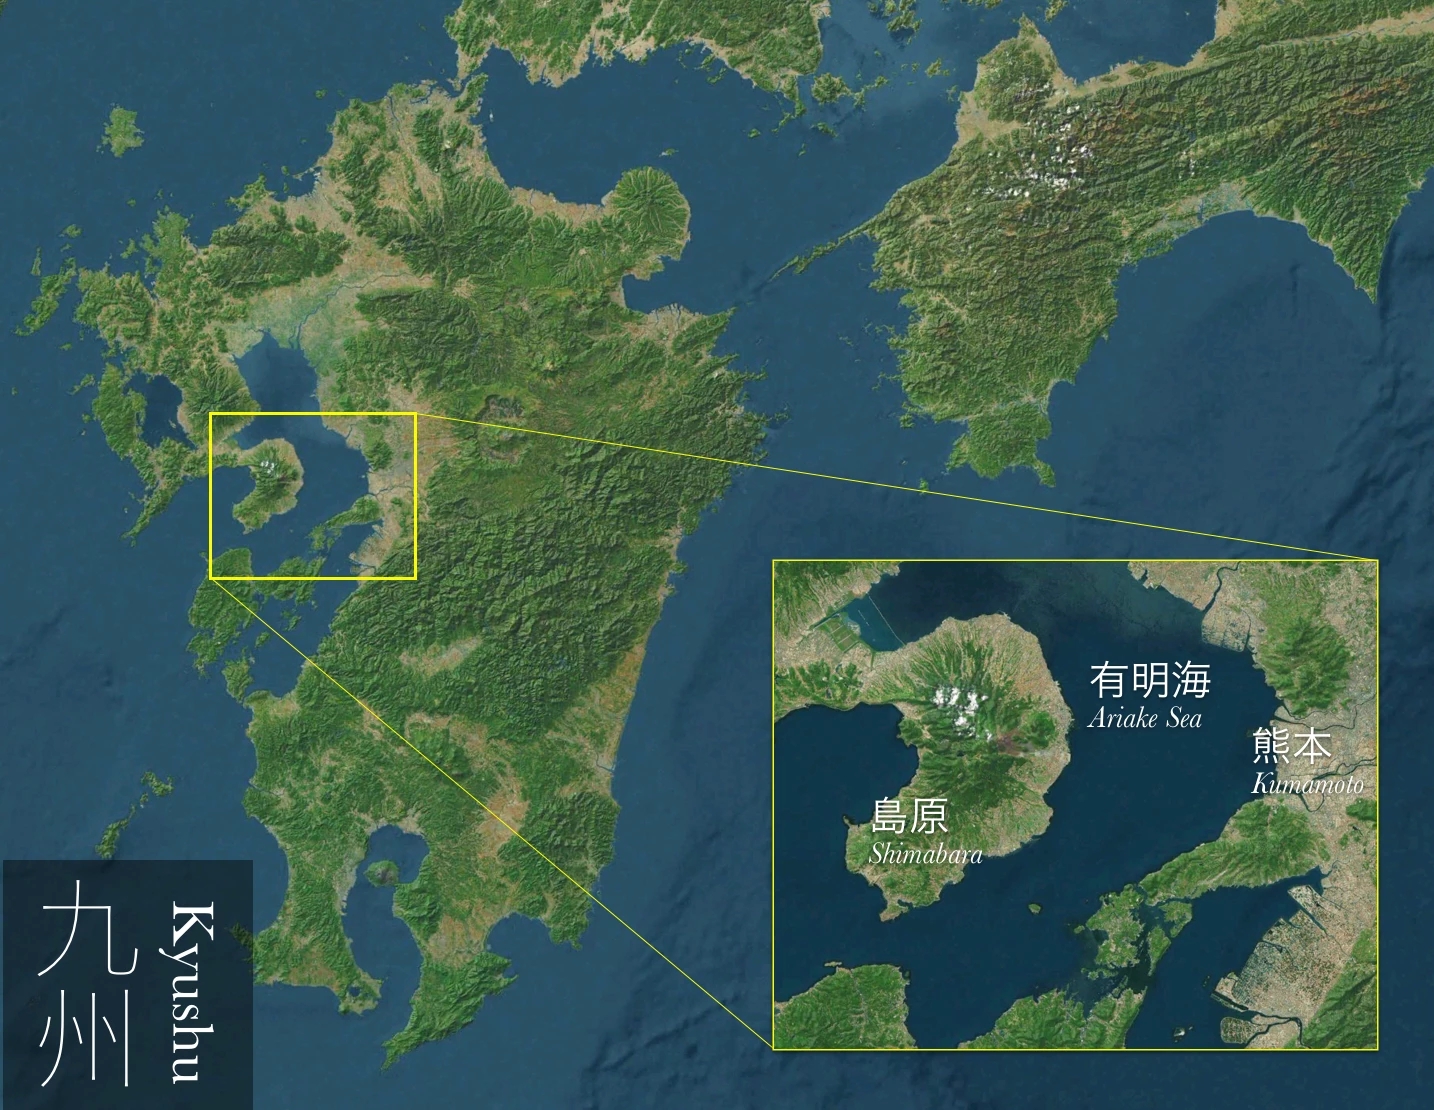 Map of Kyushu with inset showing Shimabara peninsula in relation to Kumamoto with Ariake Sea in between